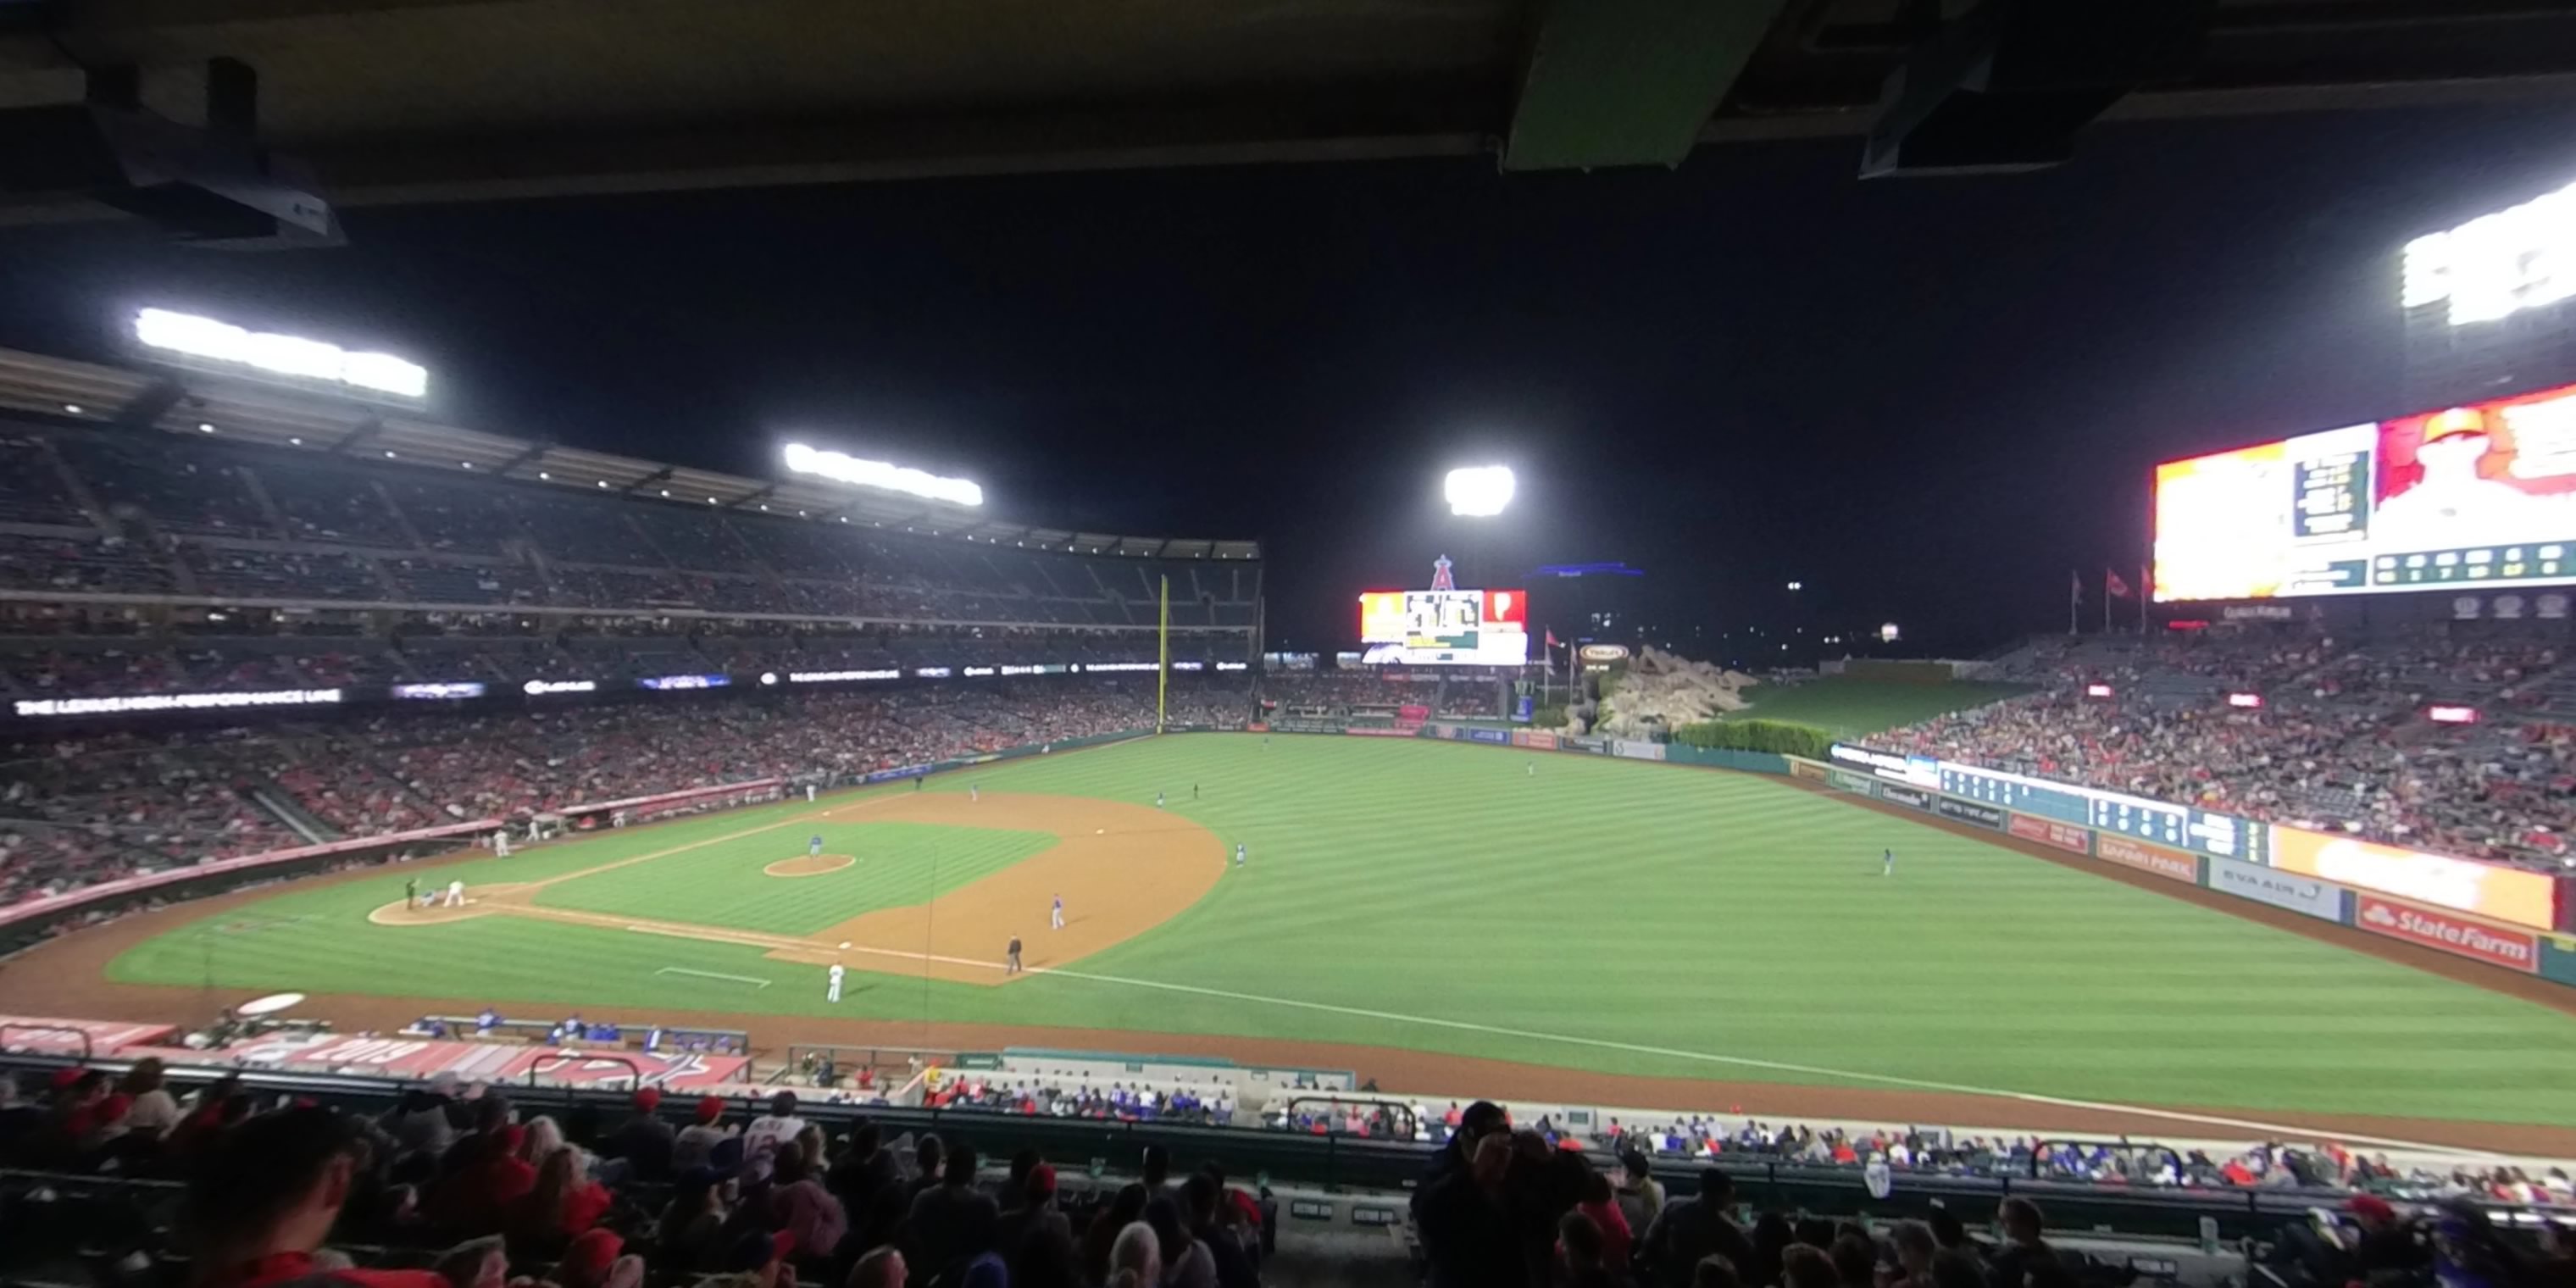 section 337 panoramic seat view  - angel stadium